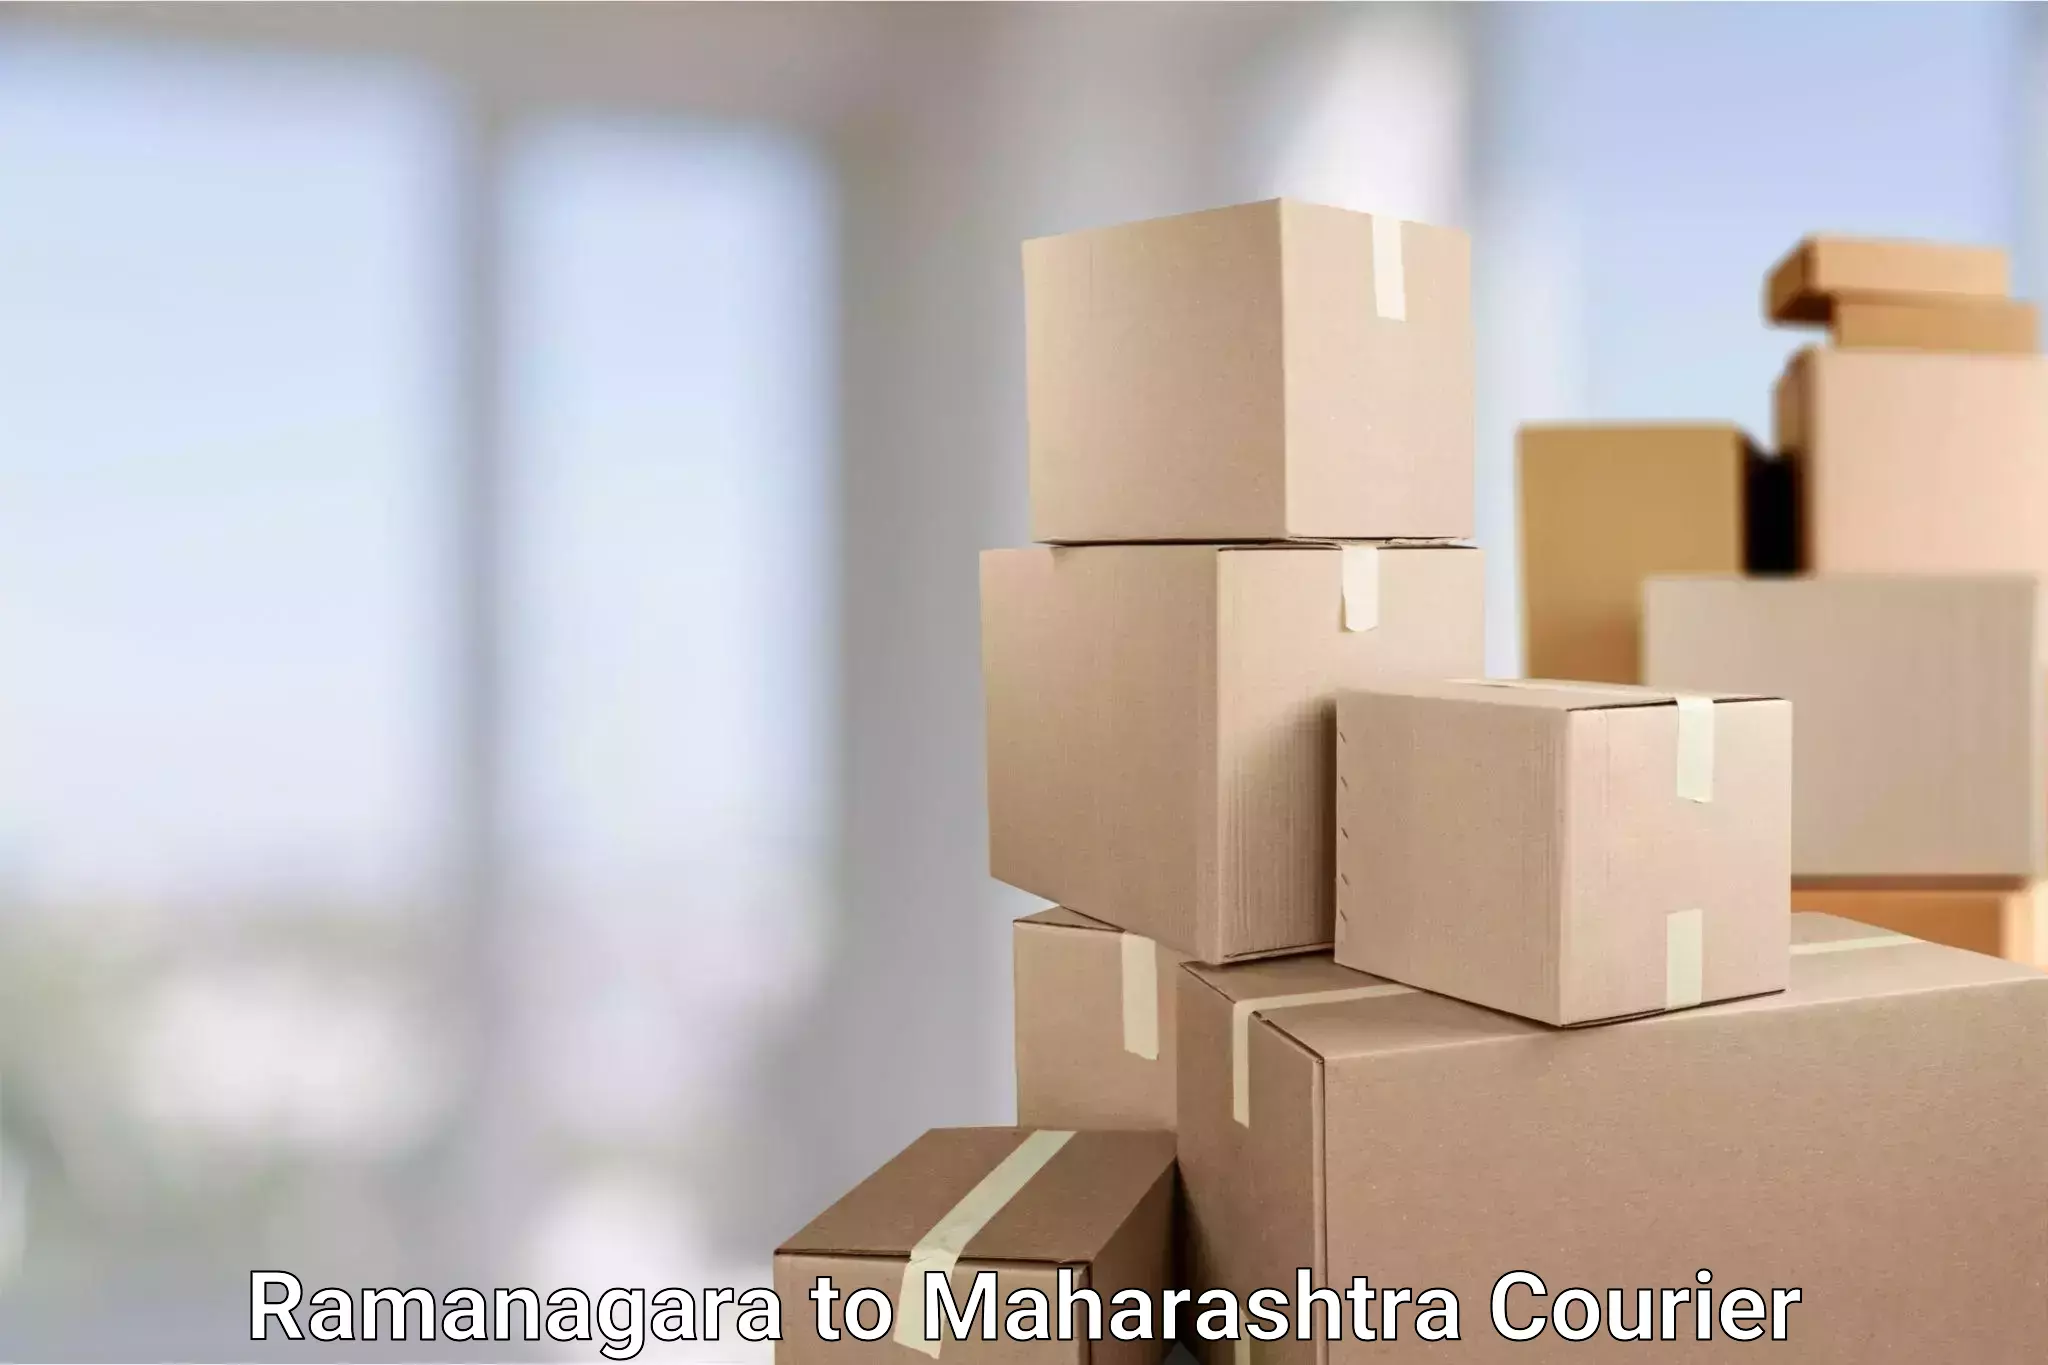 Tracking updates Ramanagara to Maharashtra